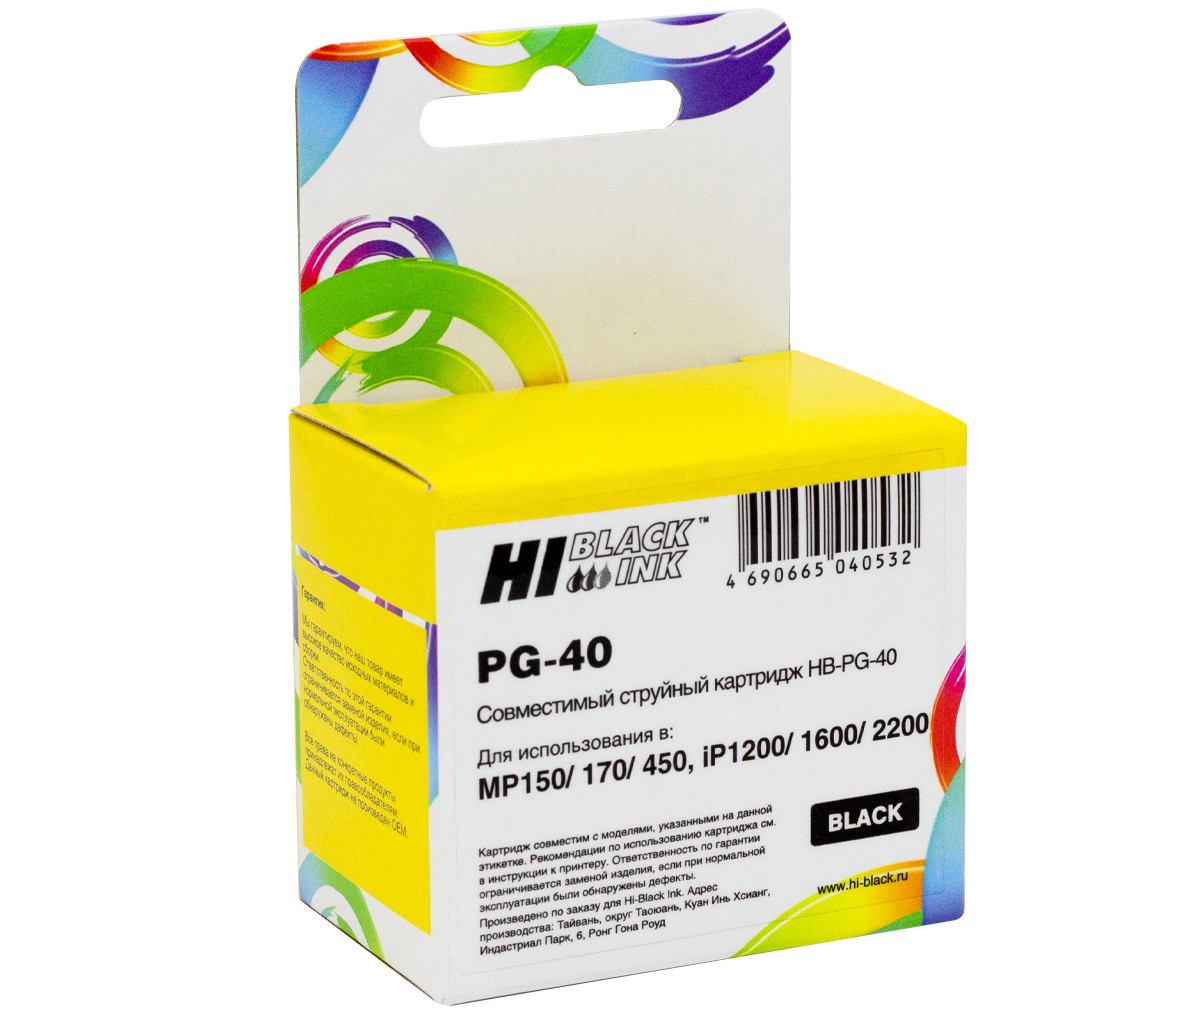 Картридж Hi-Black (HB-PG-40) для Canon PIXMAMP150/170/450/iP1200/1600/2200, Bk, new